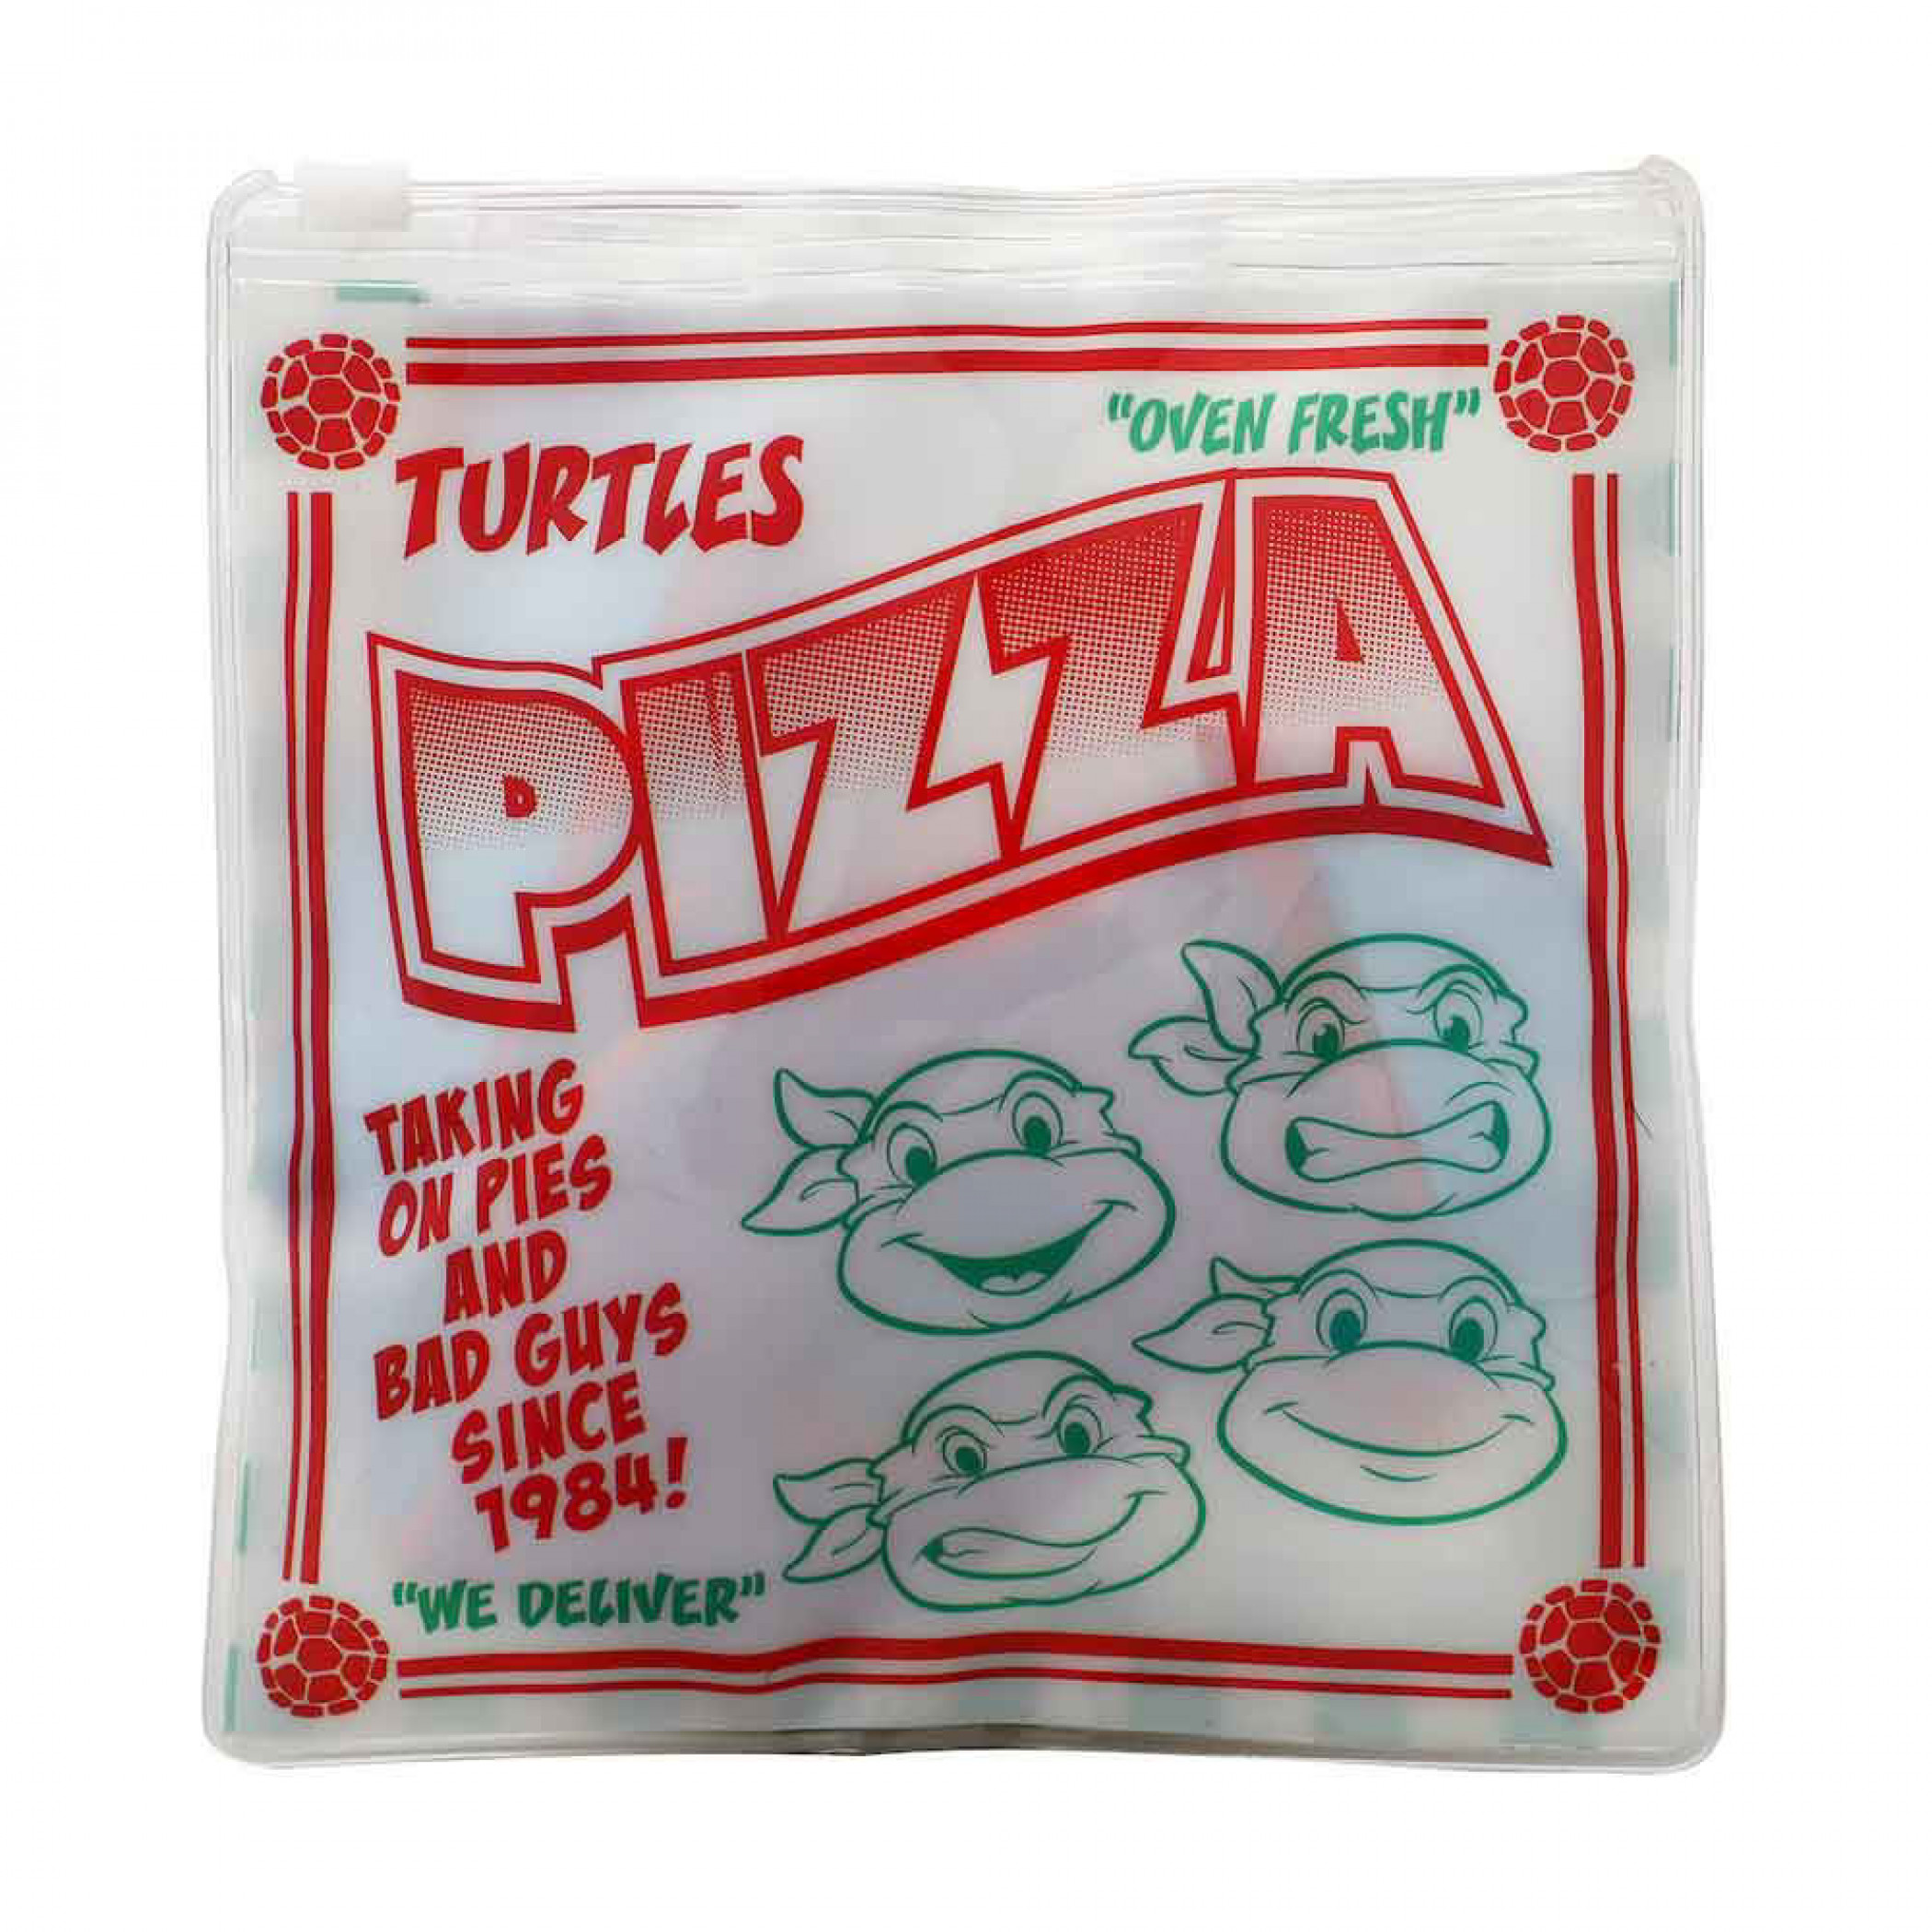 Teenage Mutant Ninja Turtles Shell Backpack with Character Masks